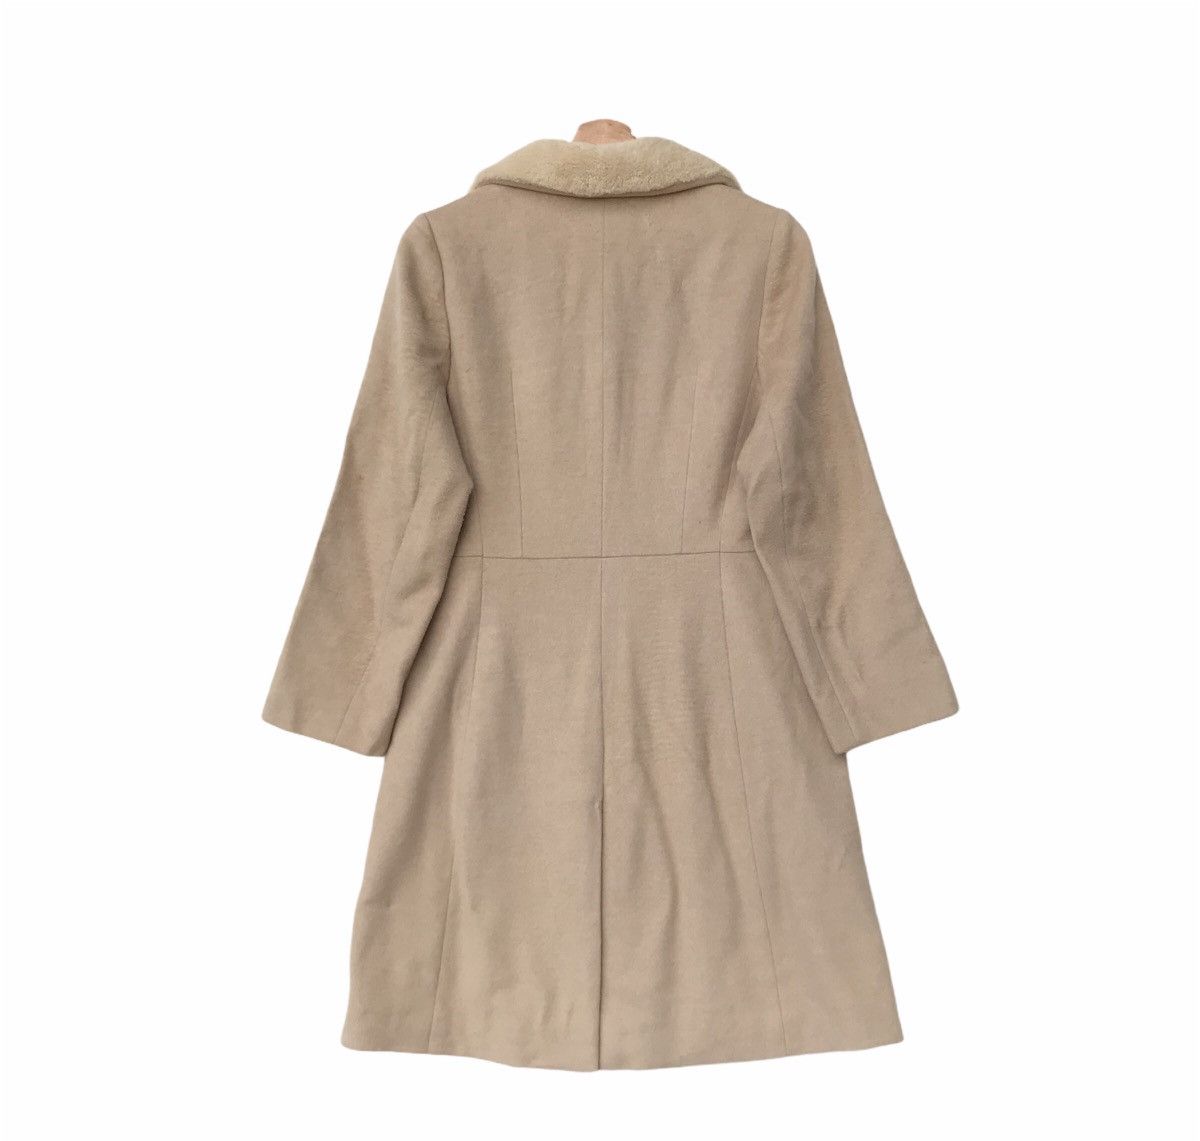 Lanvin Wool Coat Made In Japan Size 38 - 8